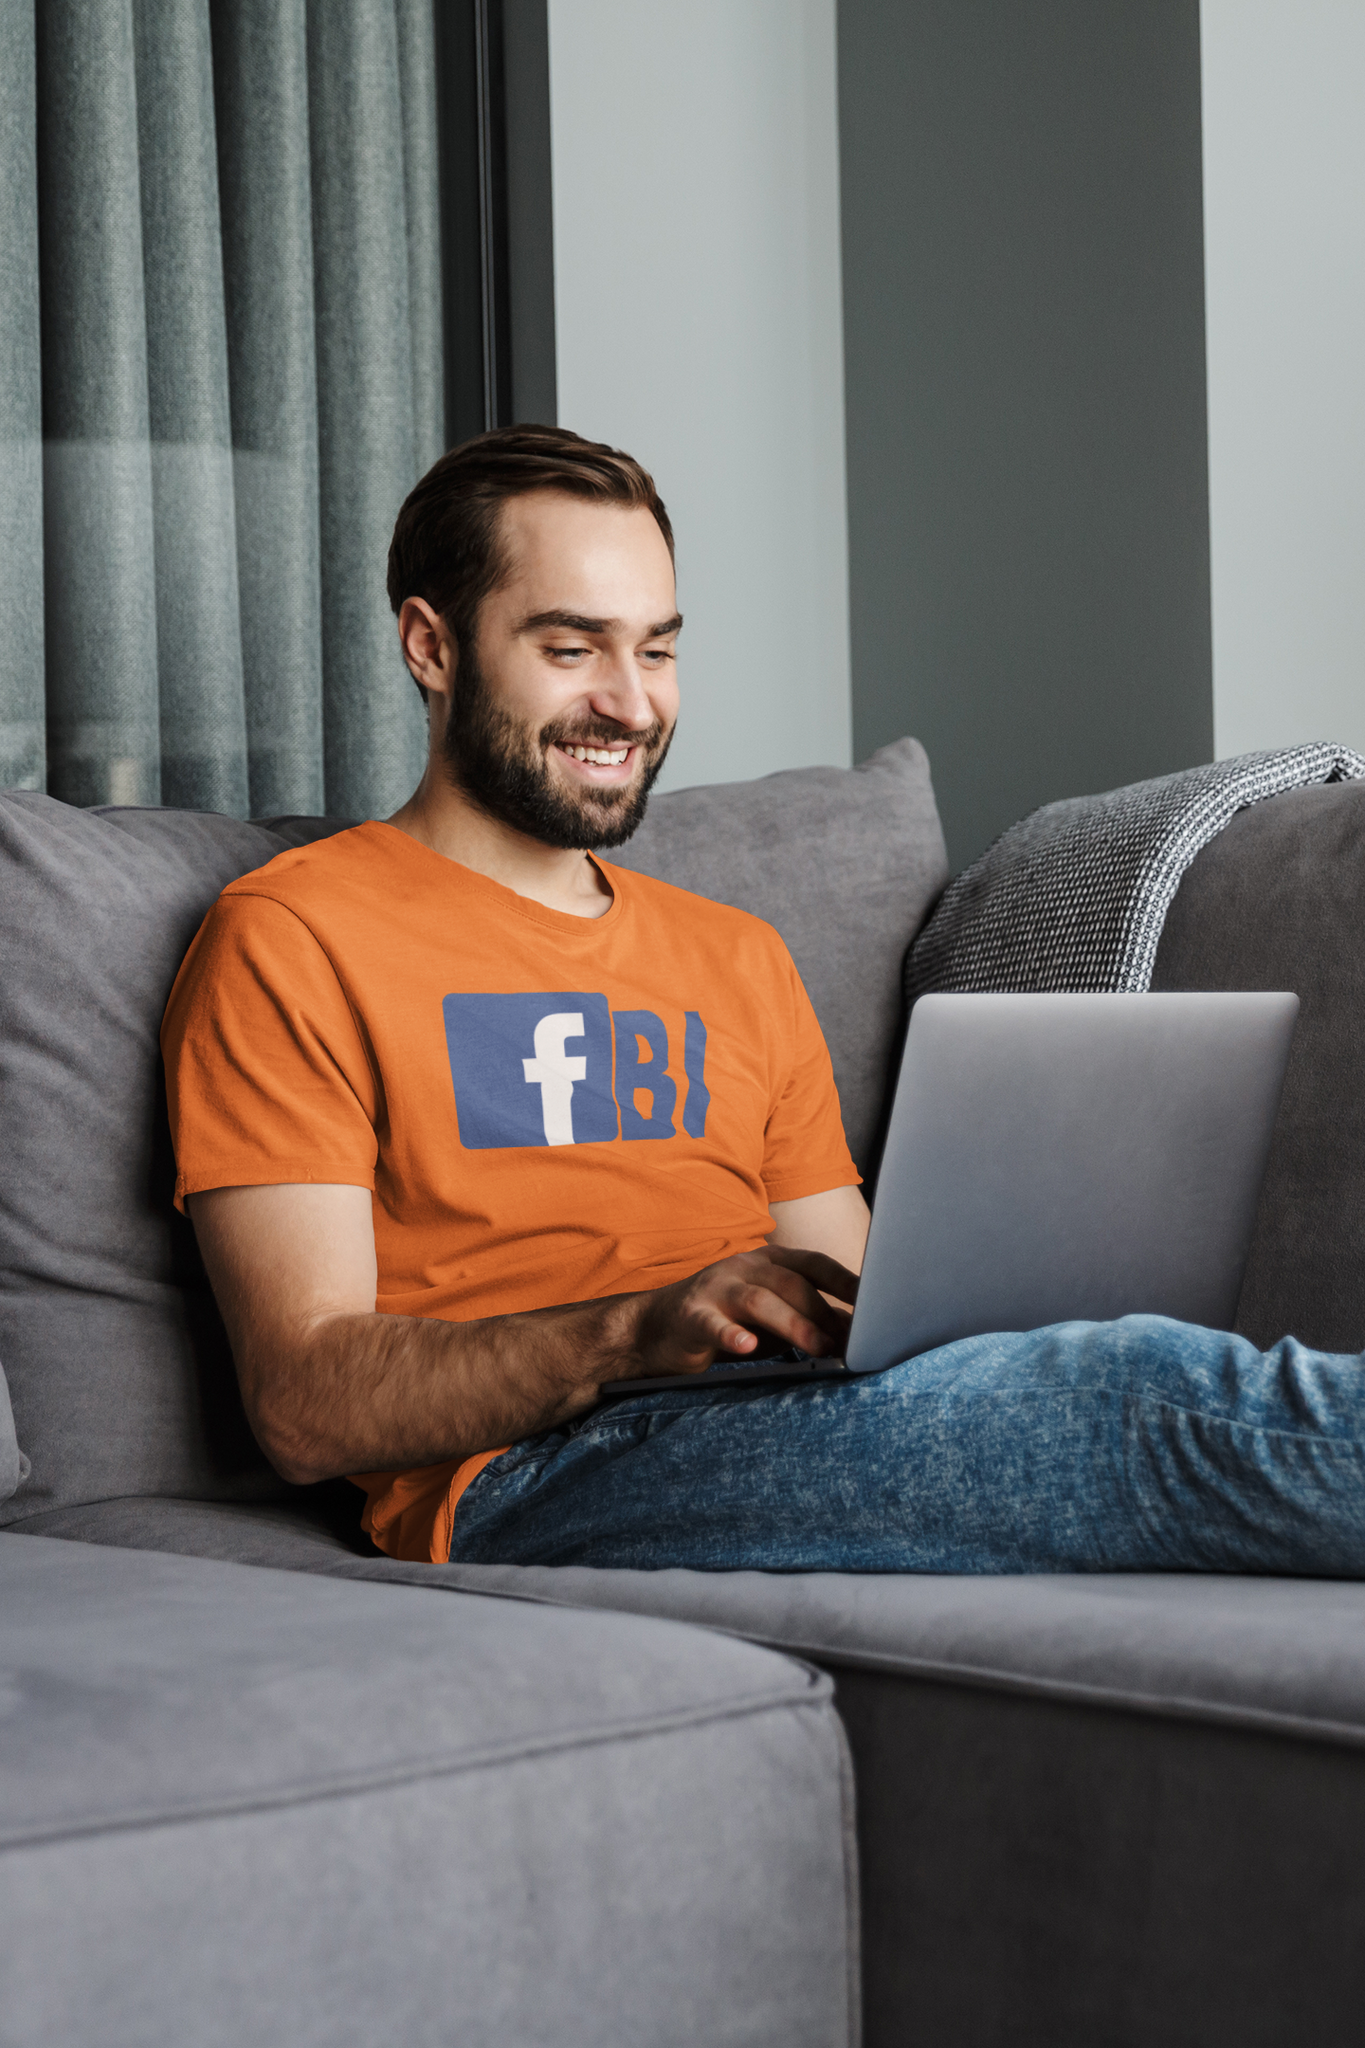 FB/FBI T-Shirt Men